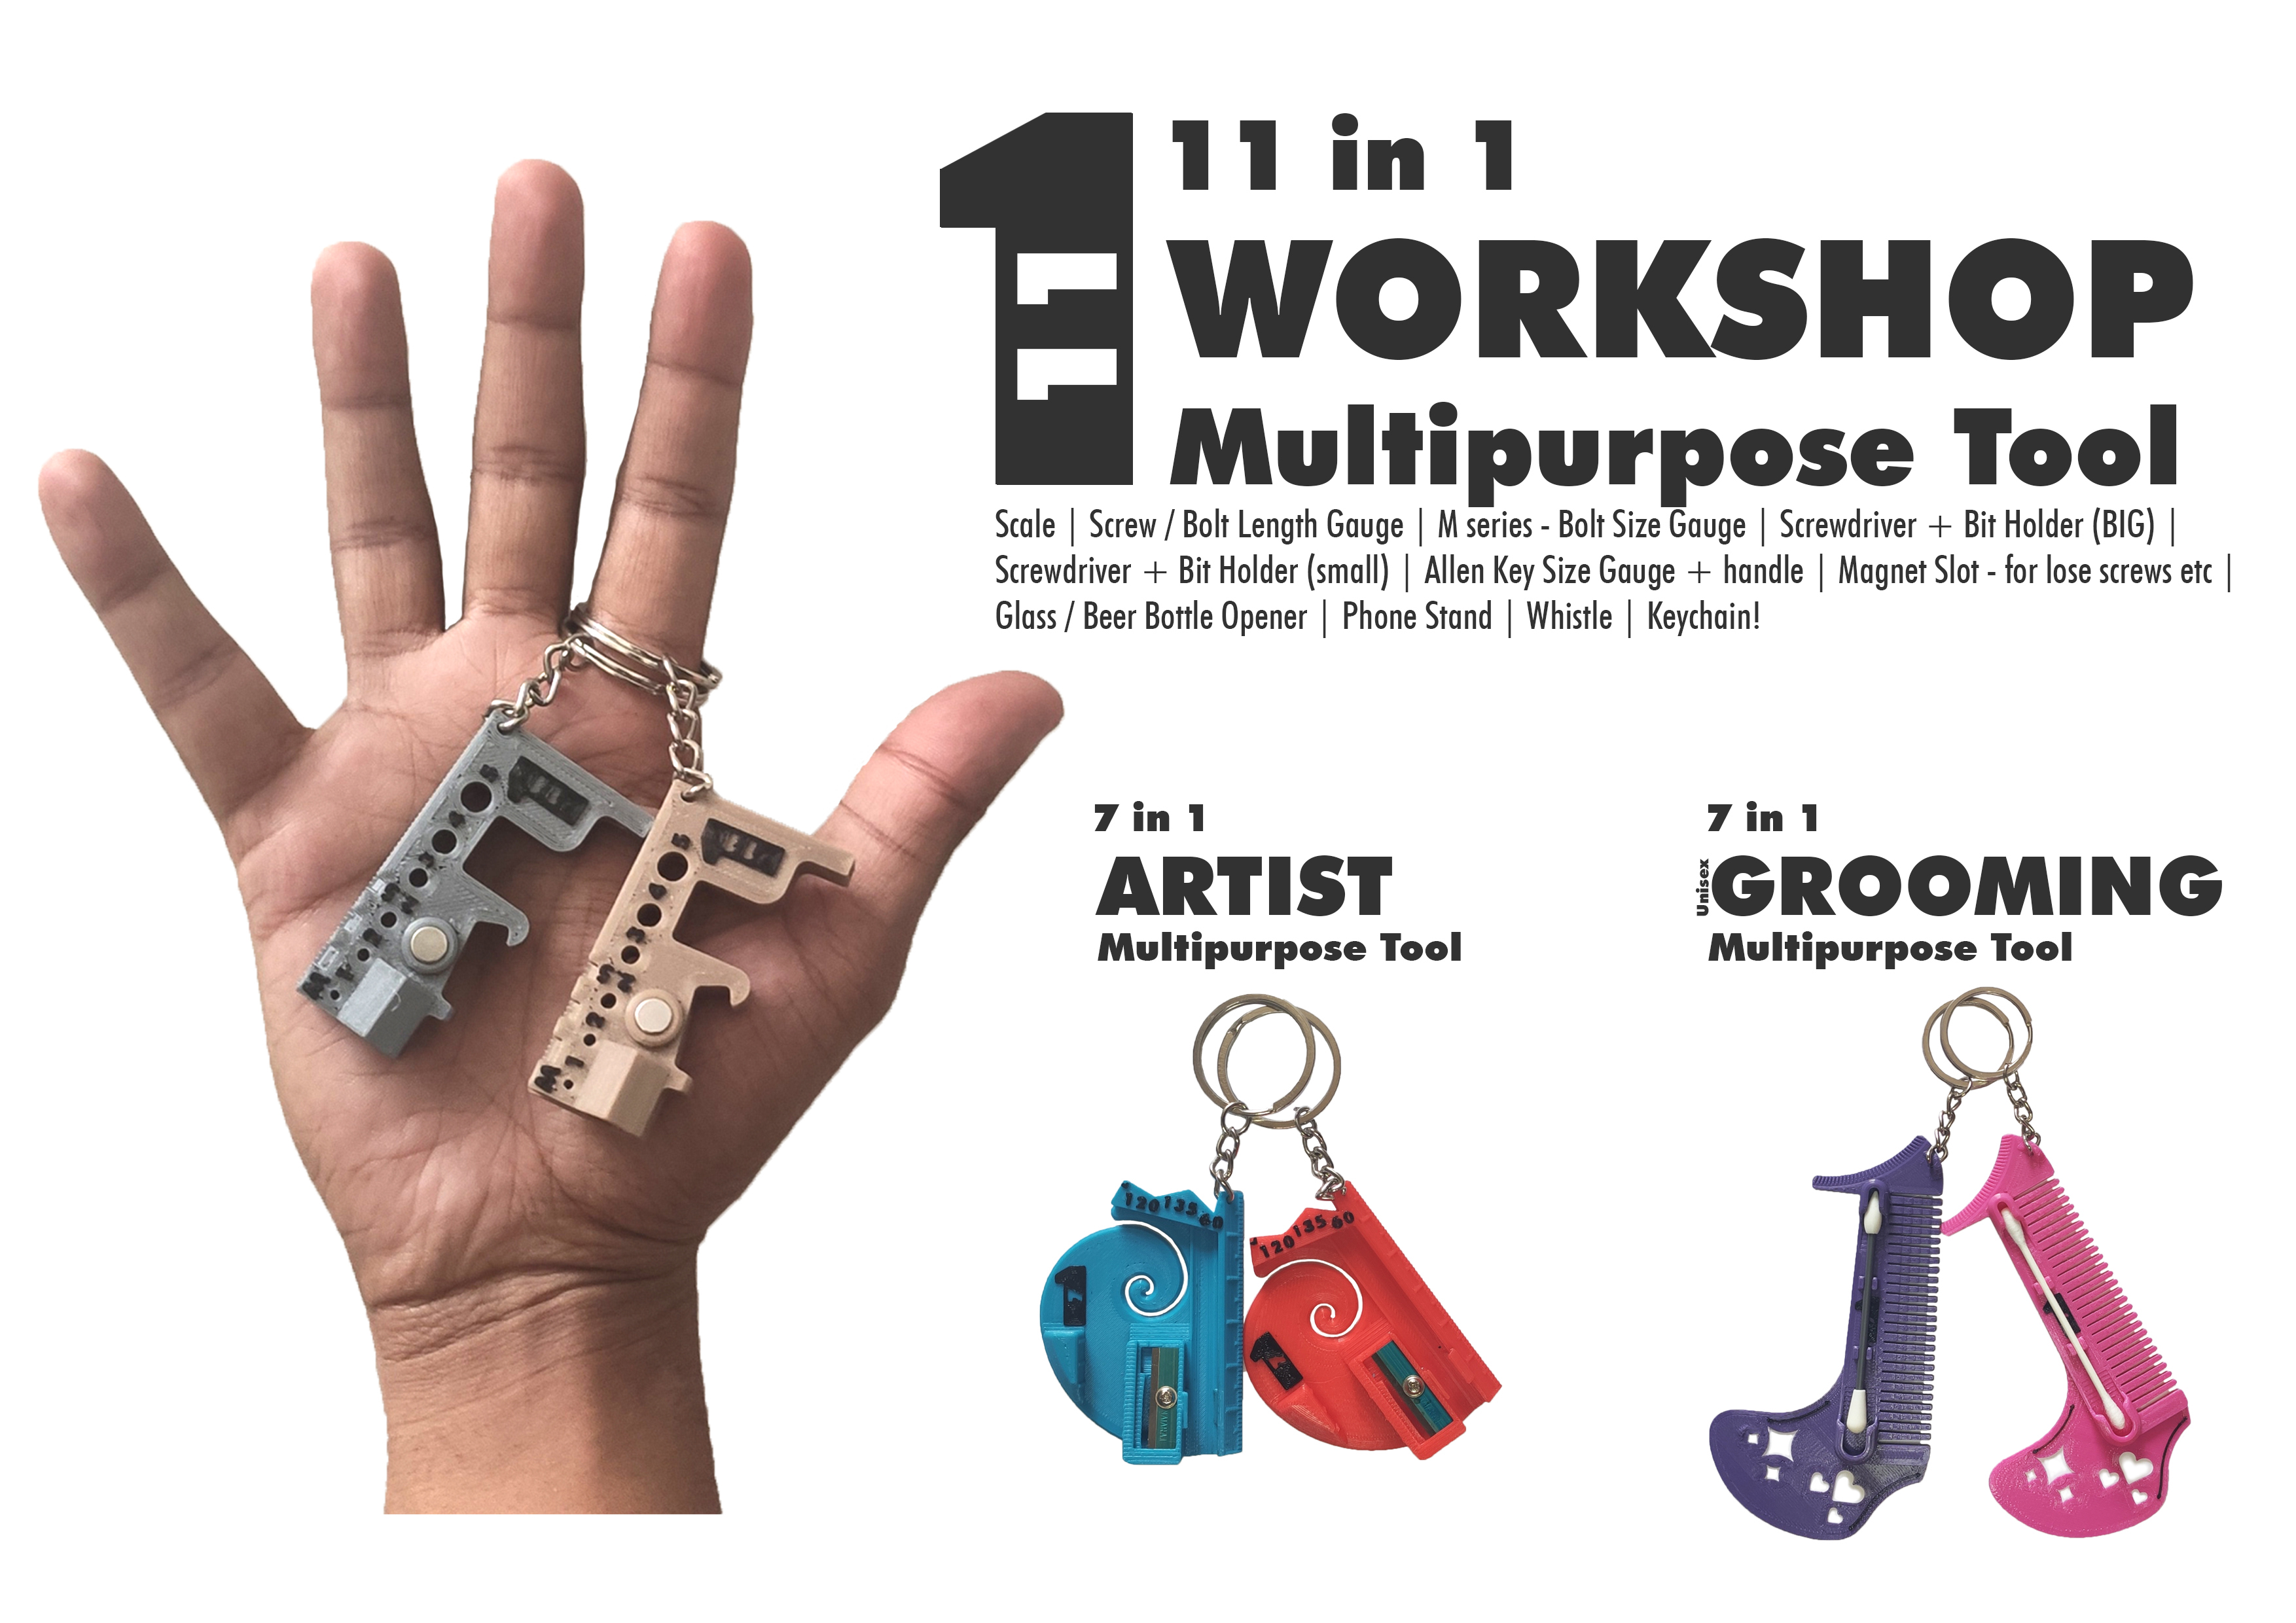 11 in 1 - Workshop Multipurpose Tool